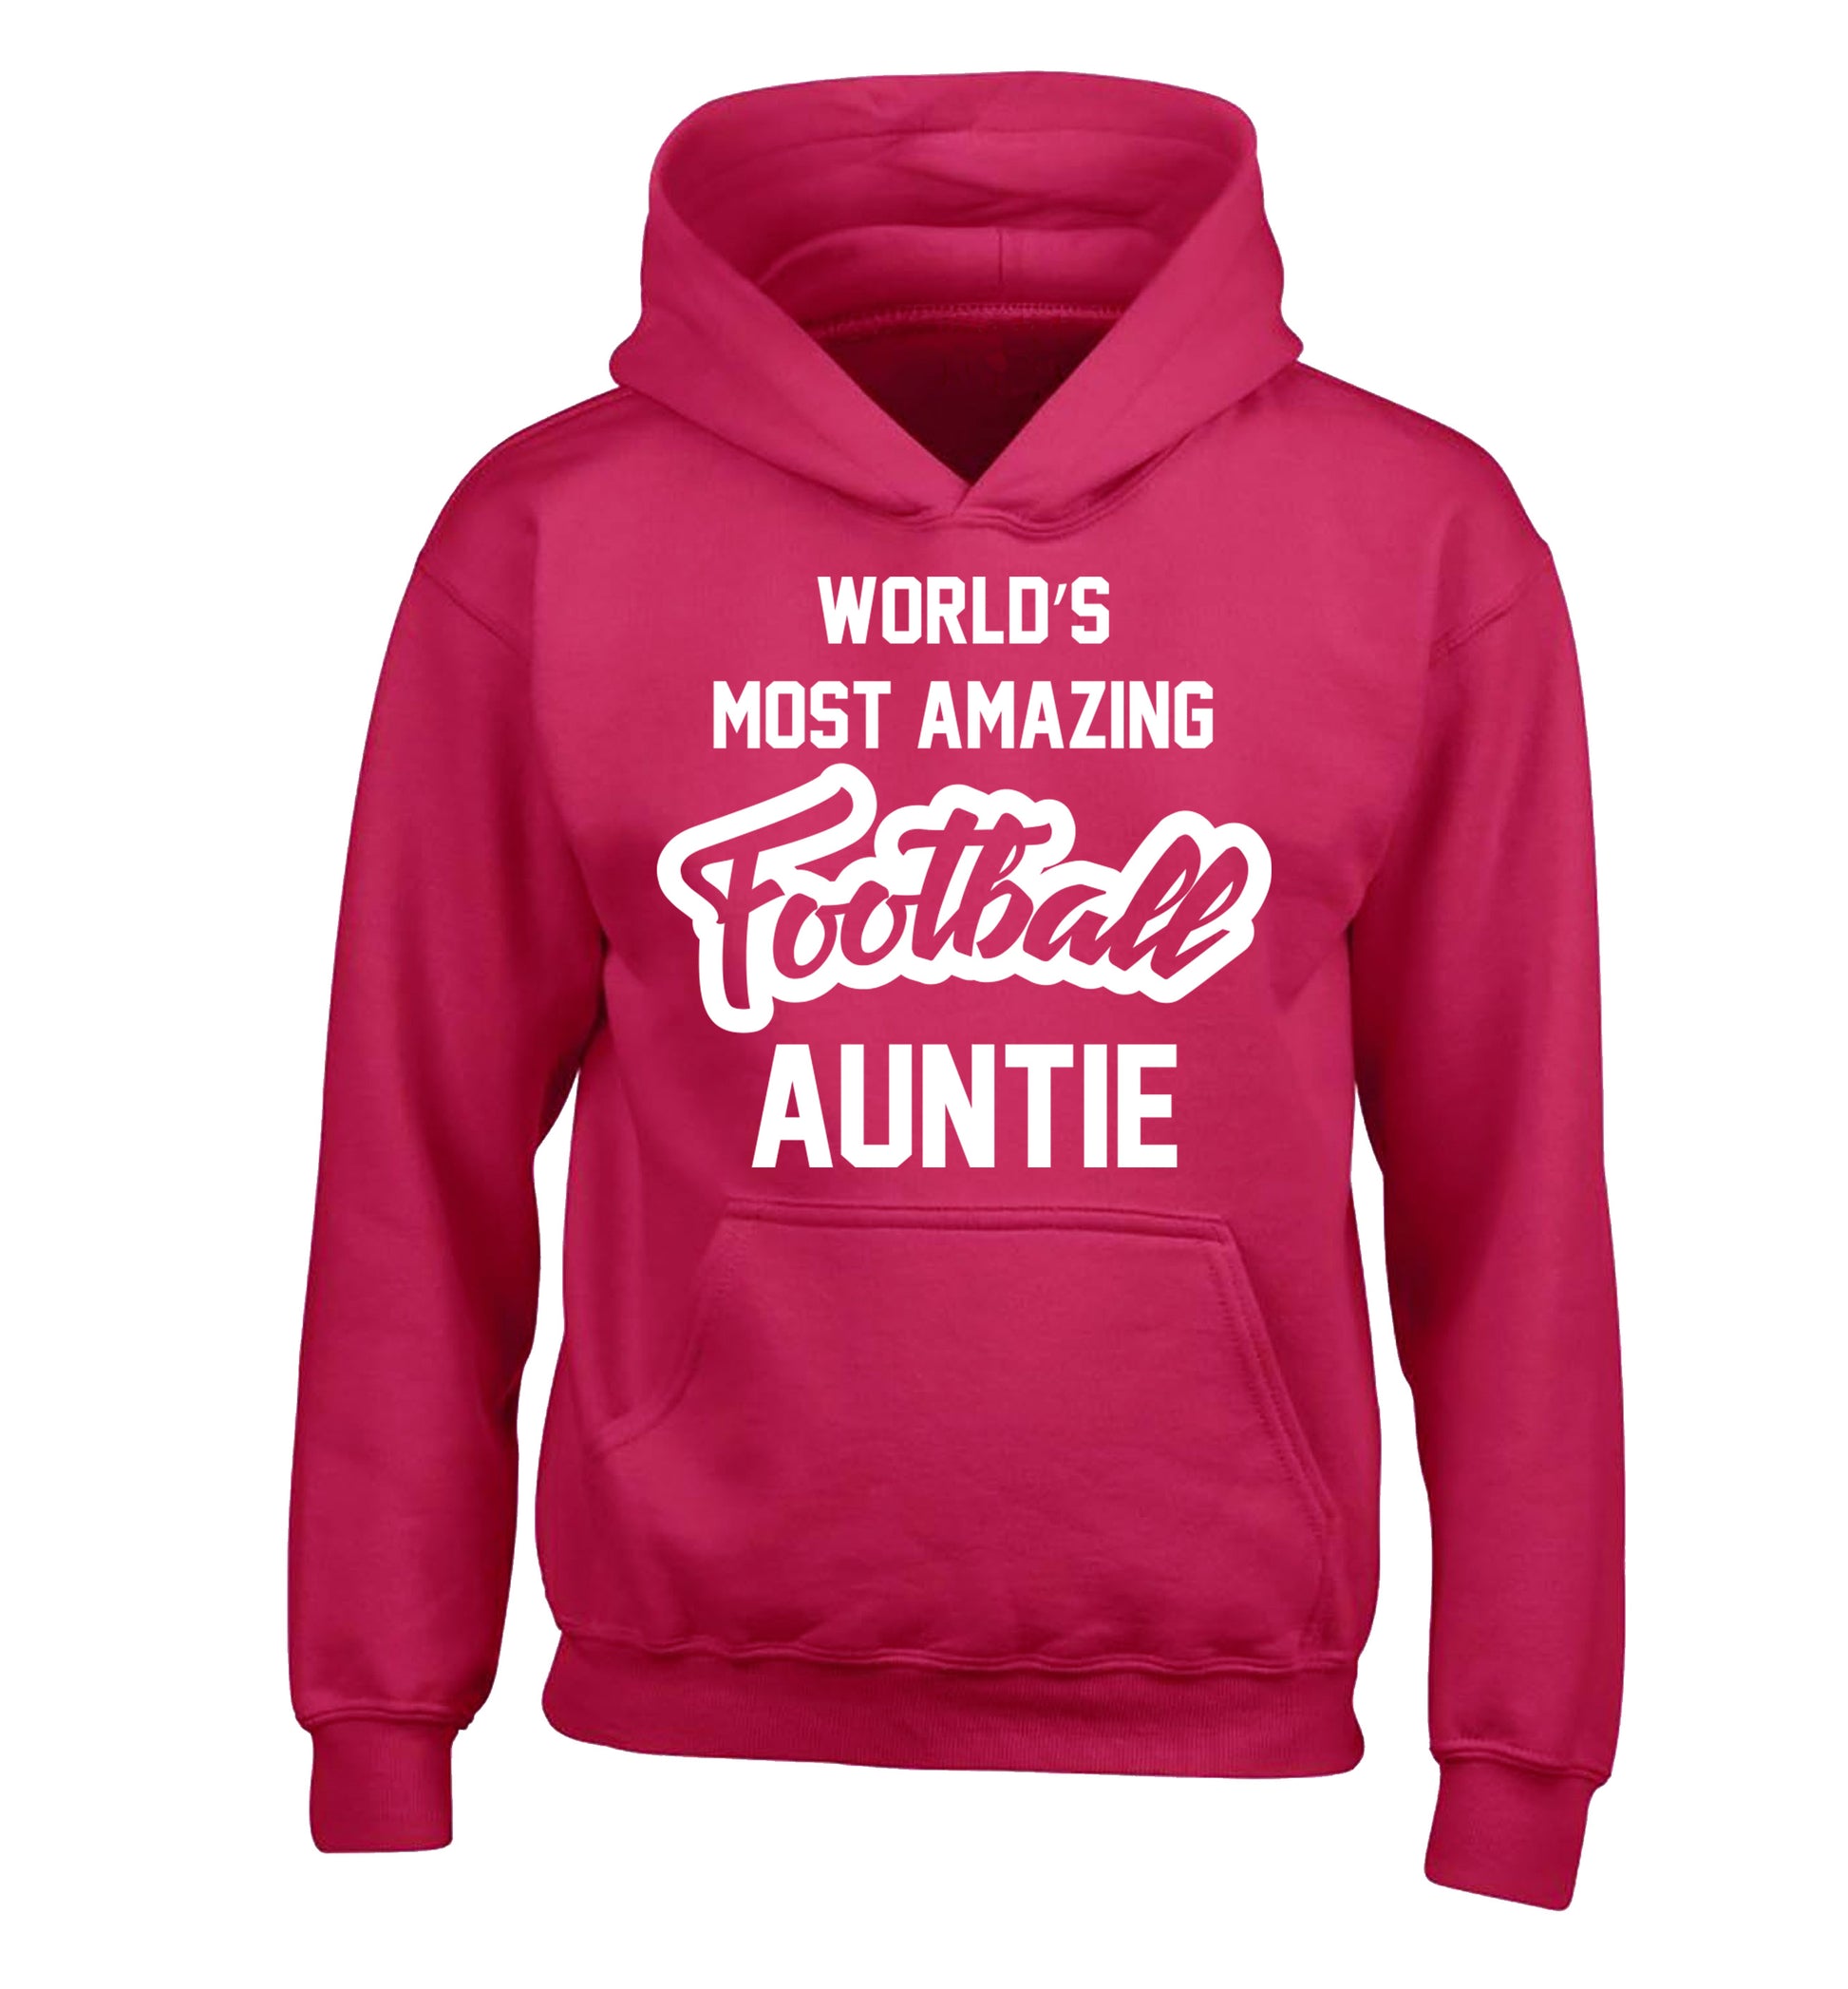 Worlds most amazing football auntie children's pink hoodie 12-14 Years